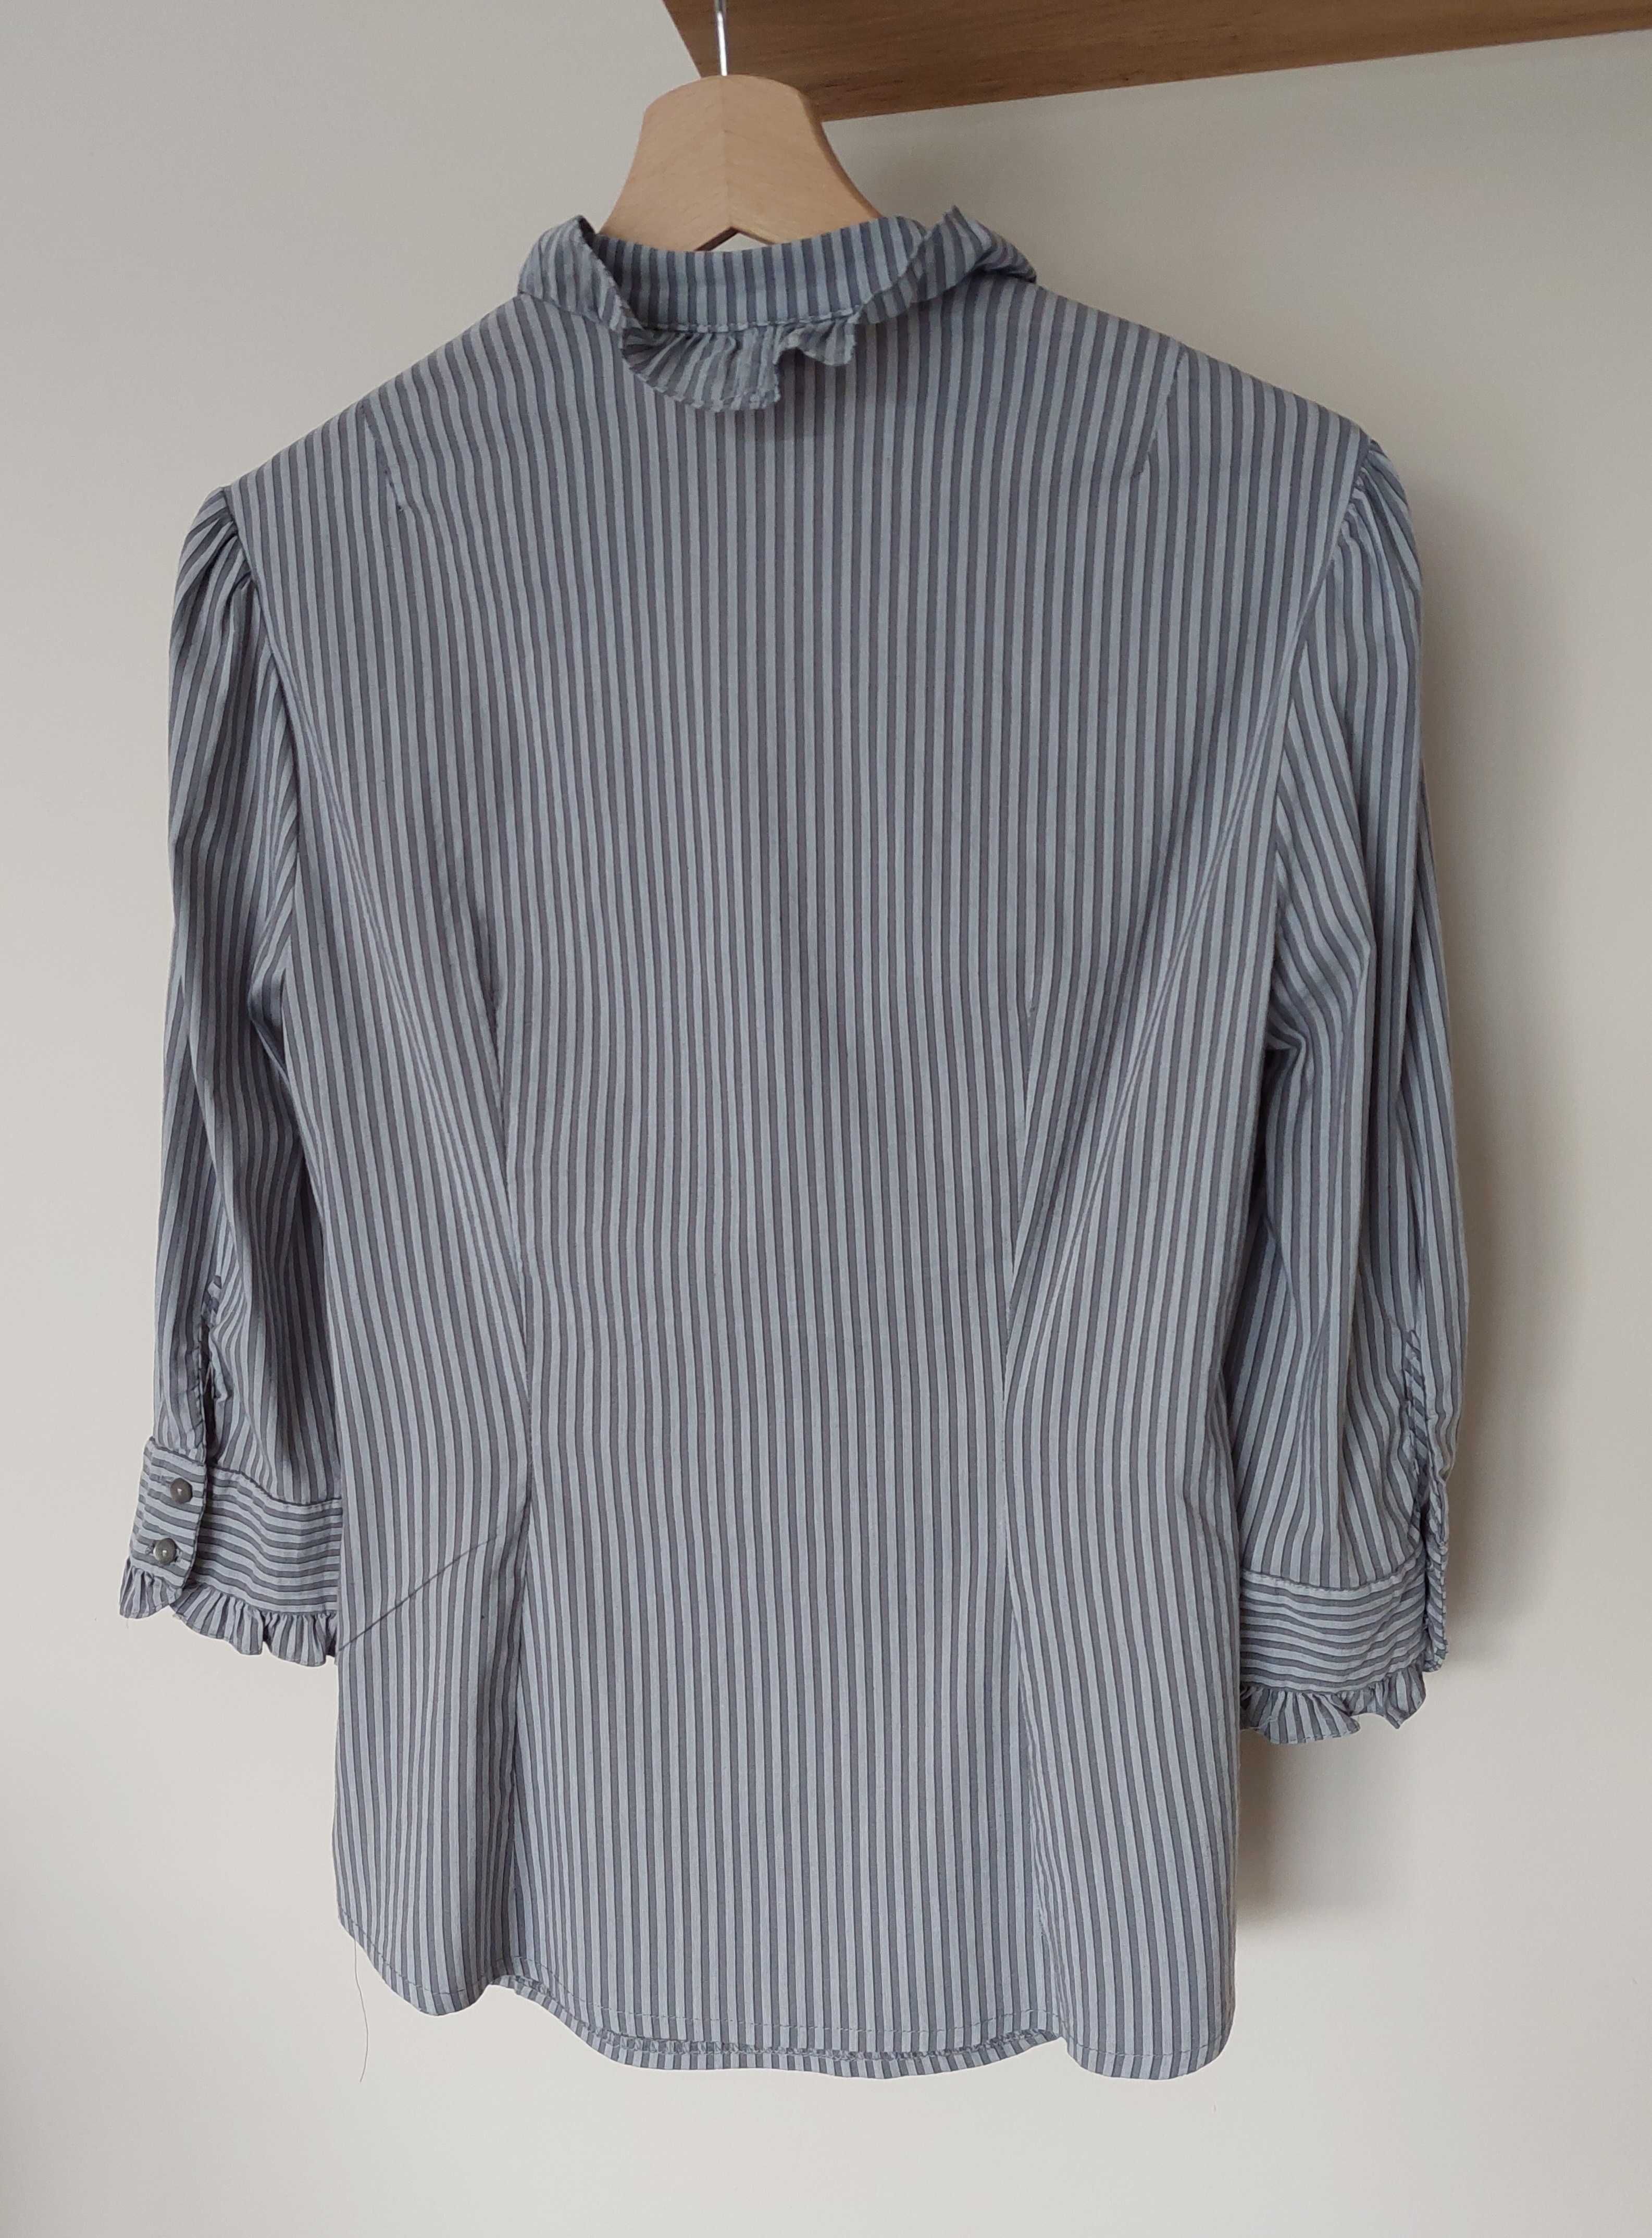 Bluzka koszula w paski Orsay 38 M falbanka 3/4 rękaw